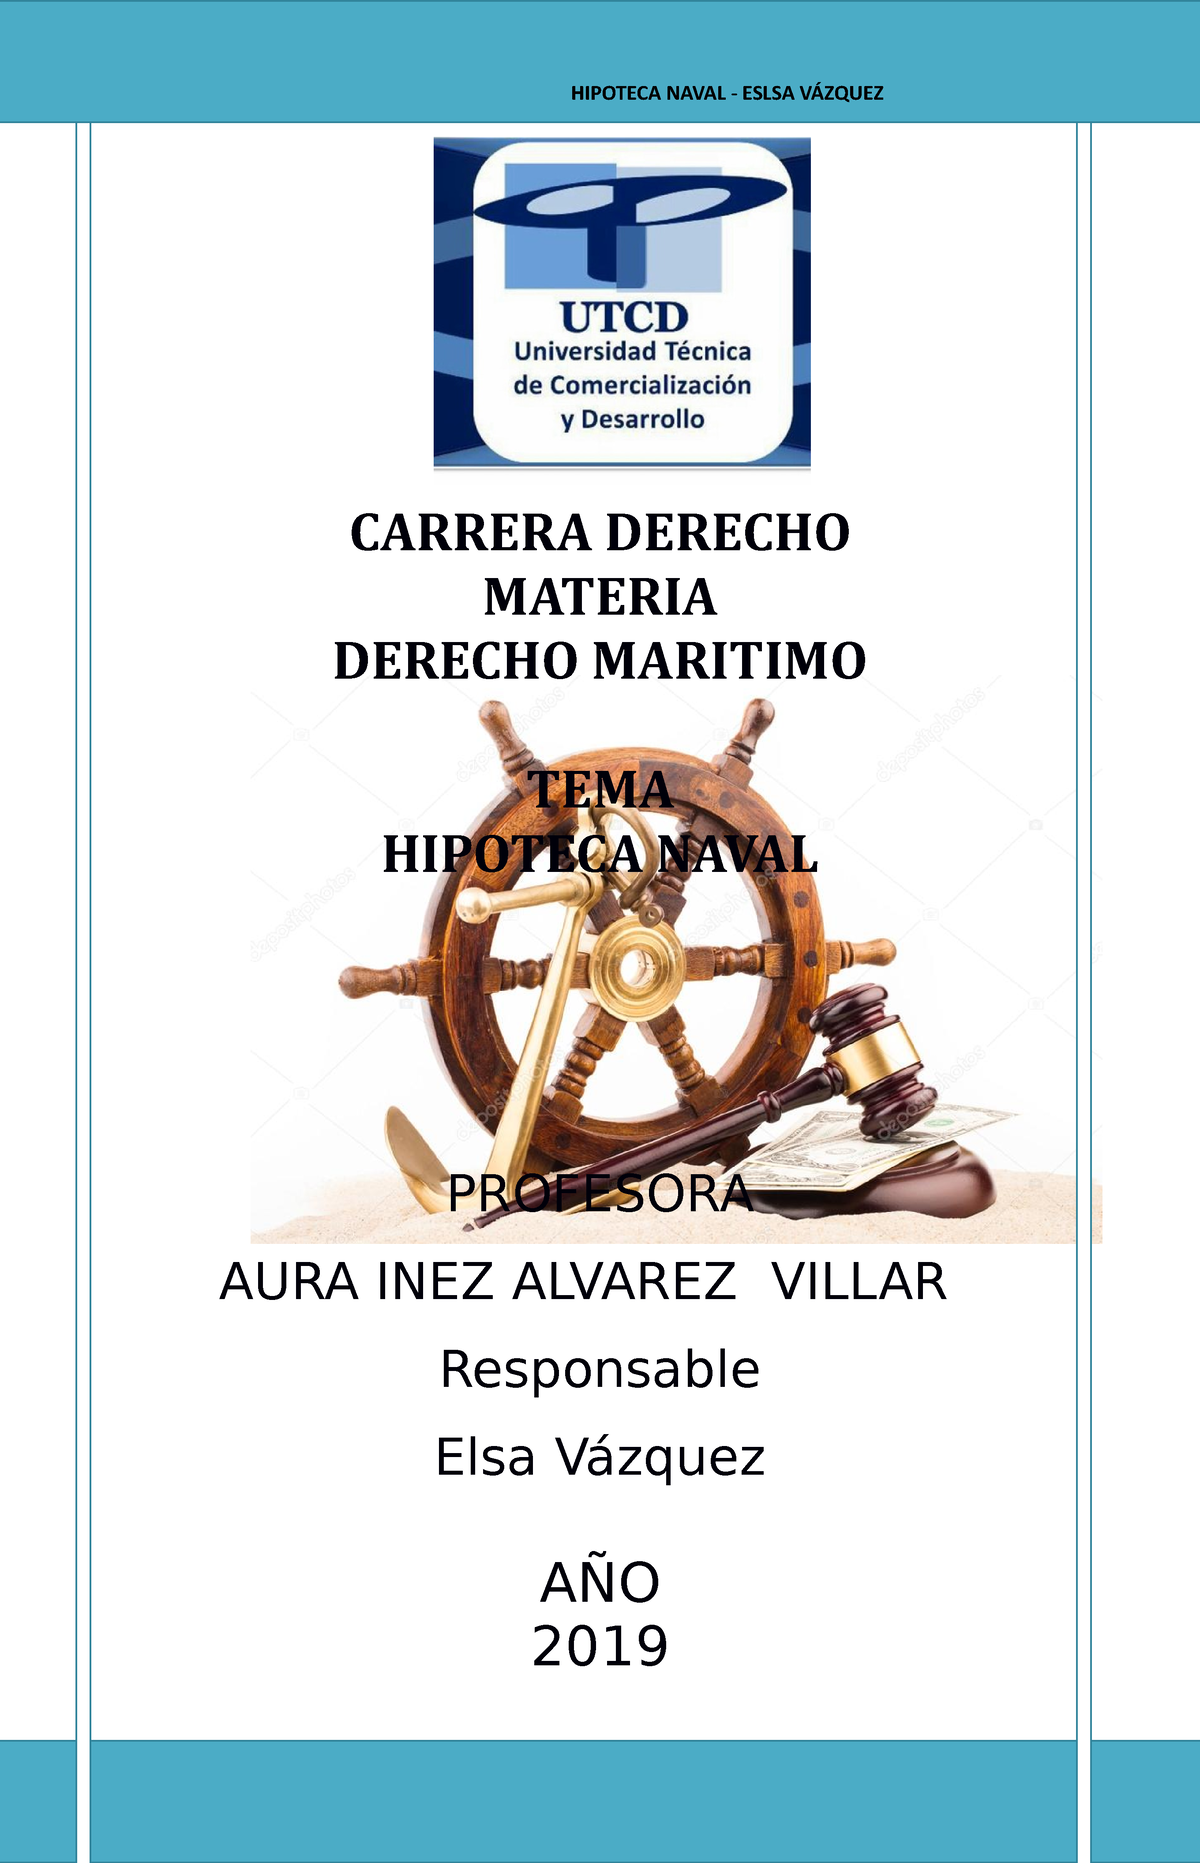 Hipoteca Naval Carrera Derecho Materia Derecho Maritimo Tema Hipoteca Naval Profesora Aura 7743